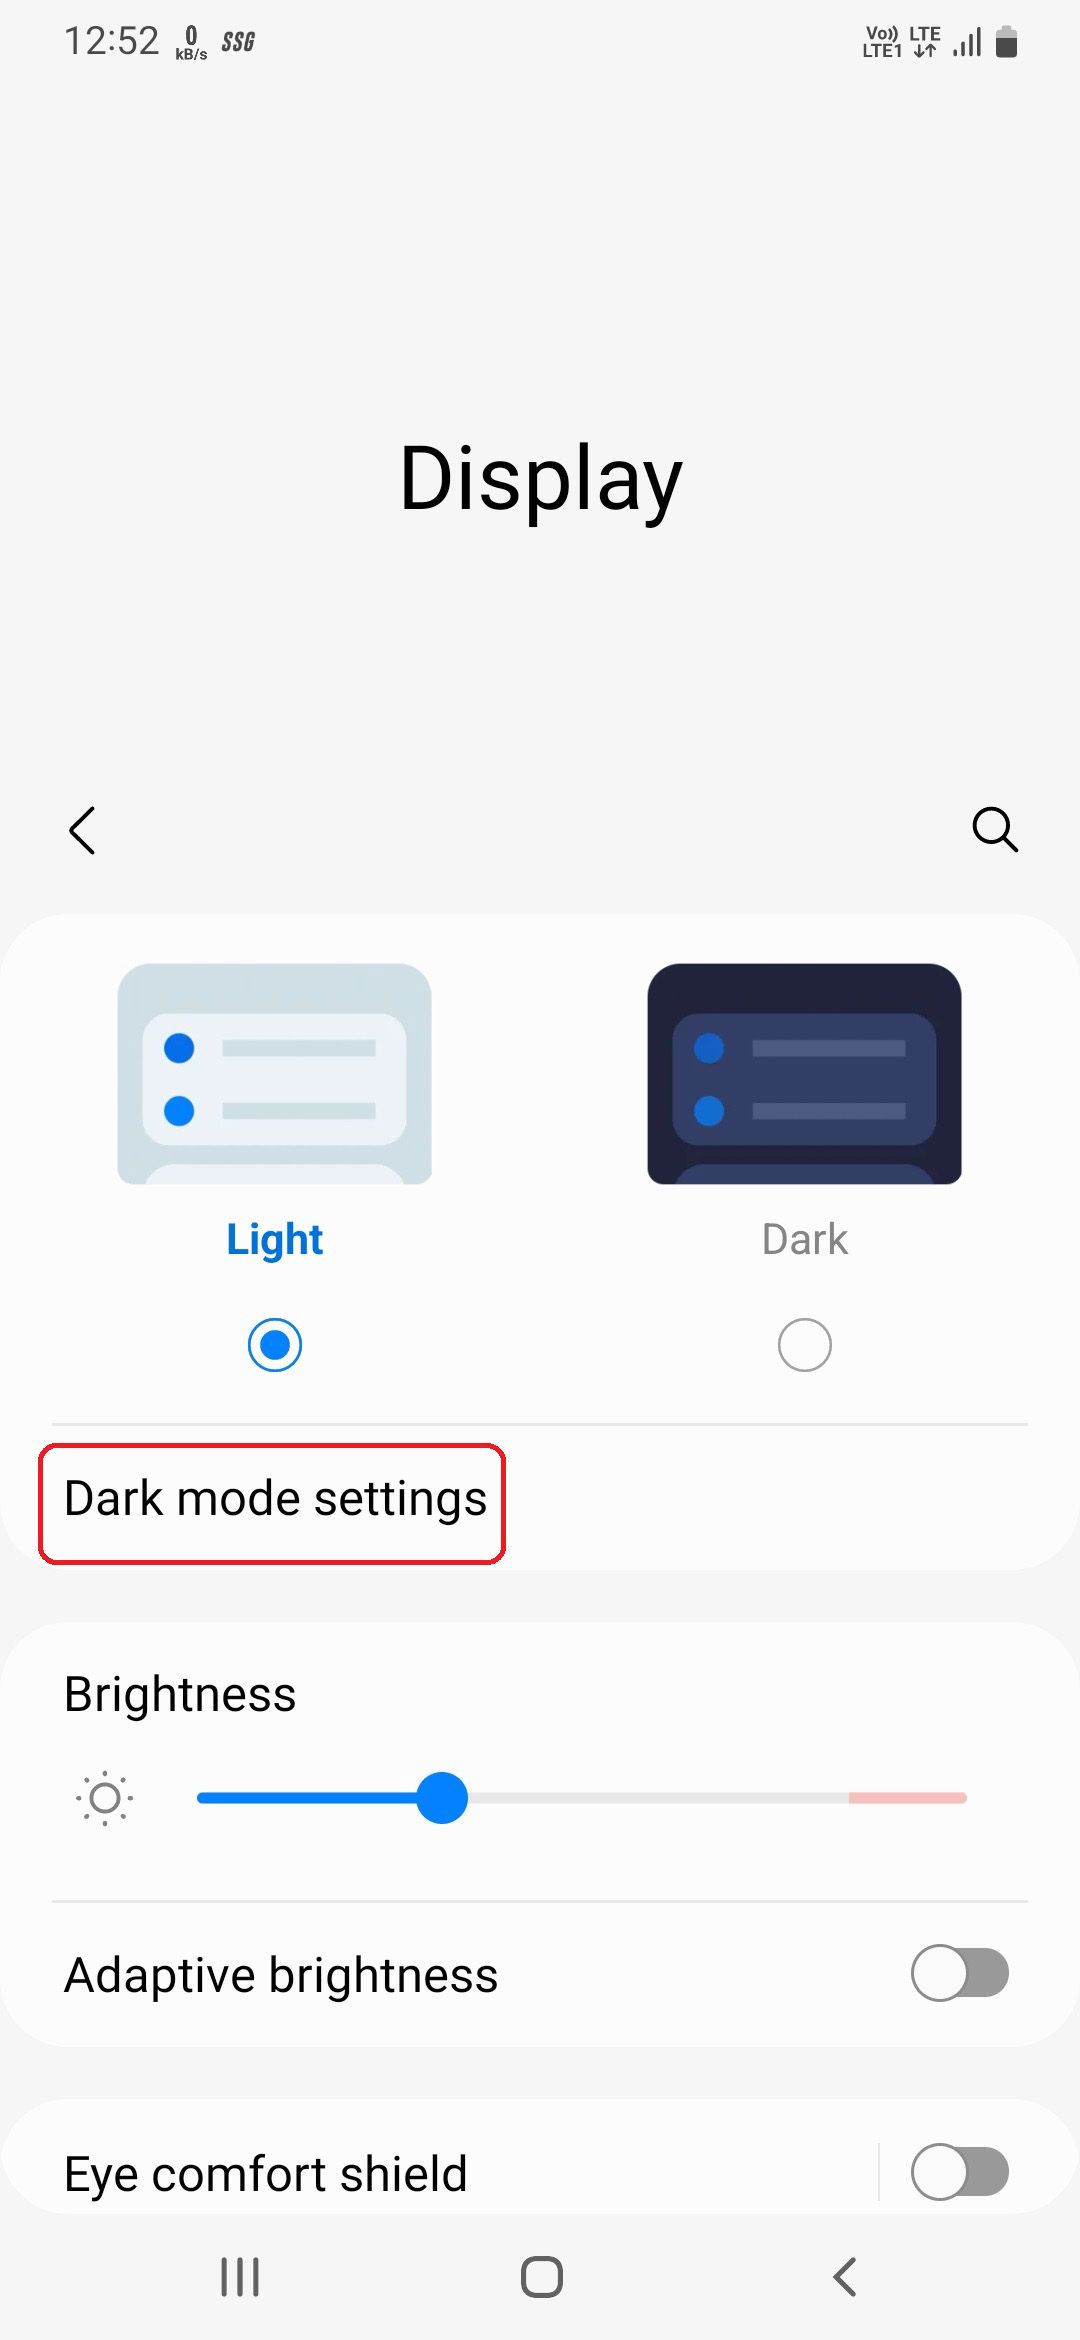 Dark mode settings option in the display settings